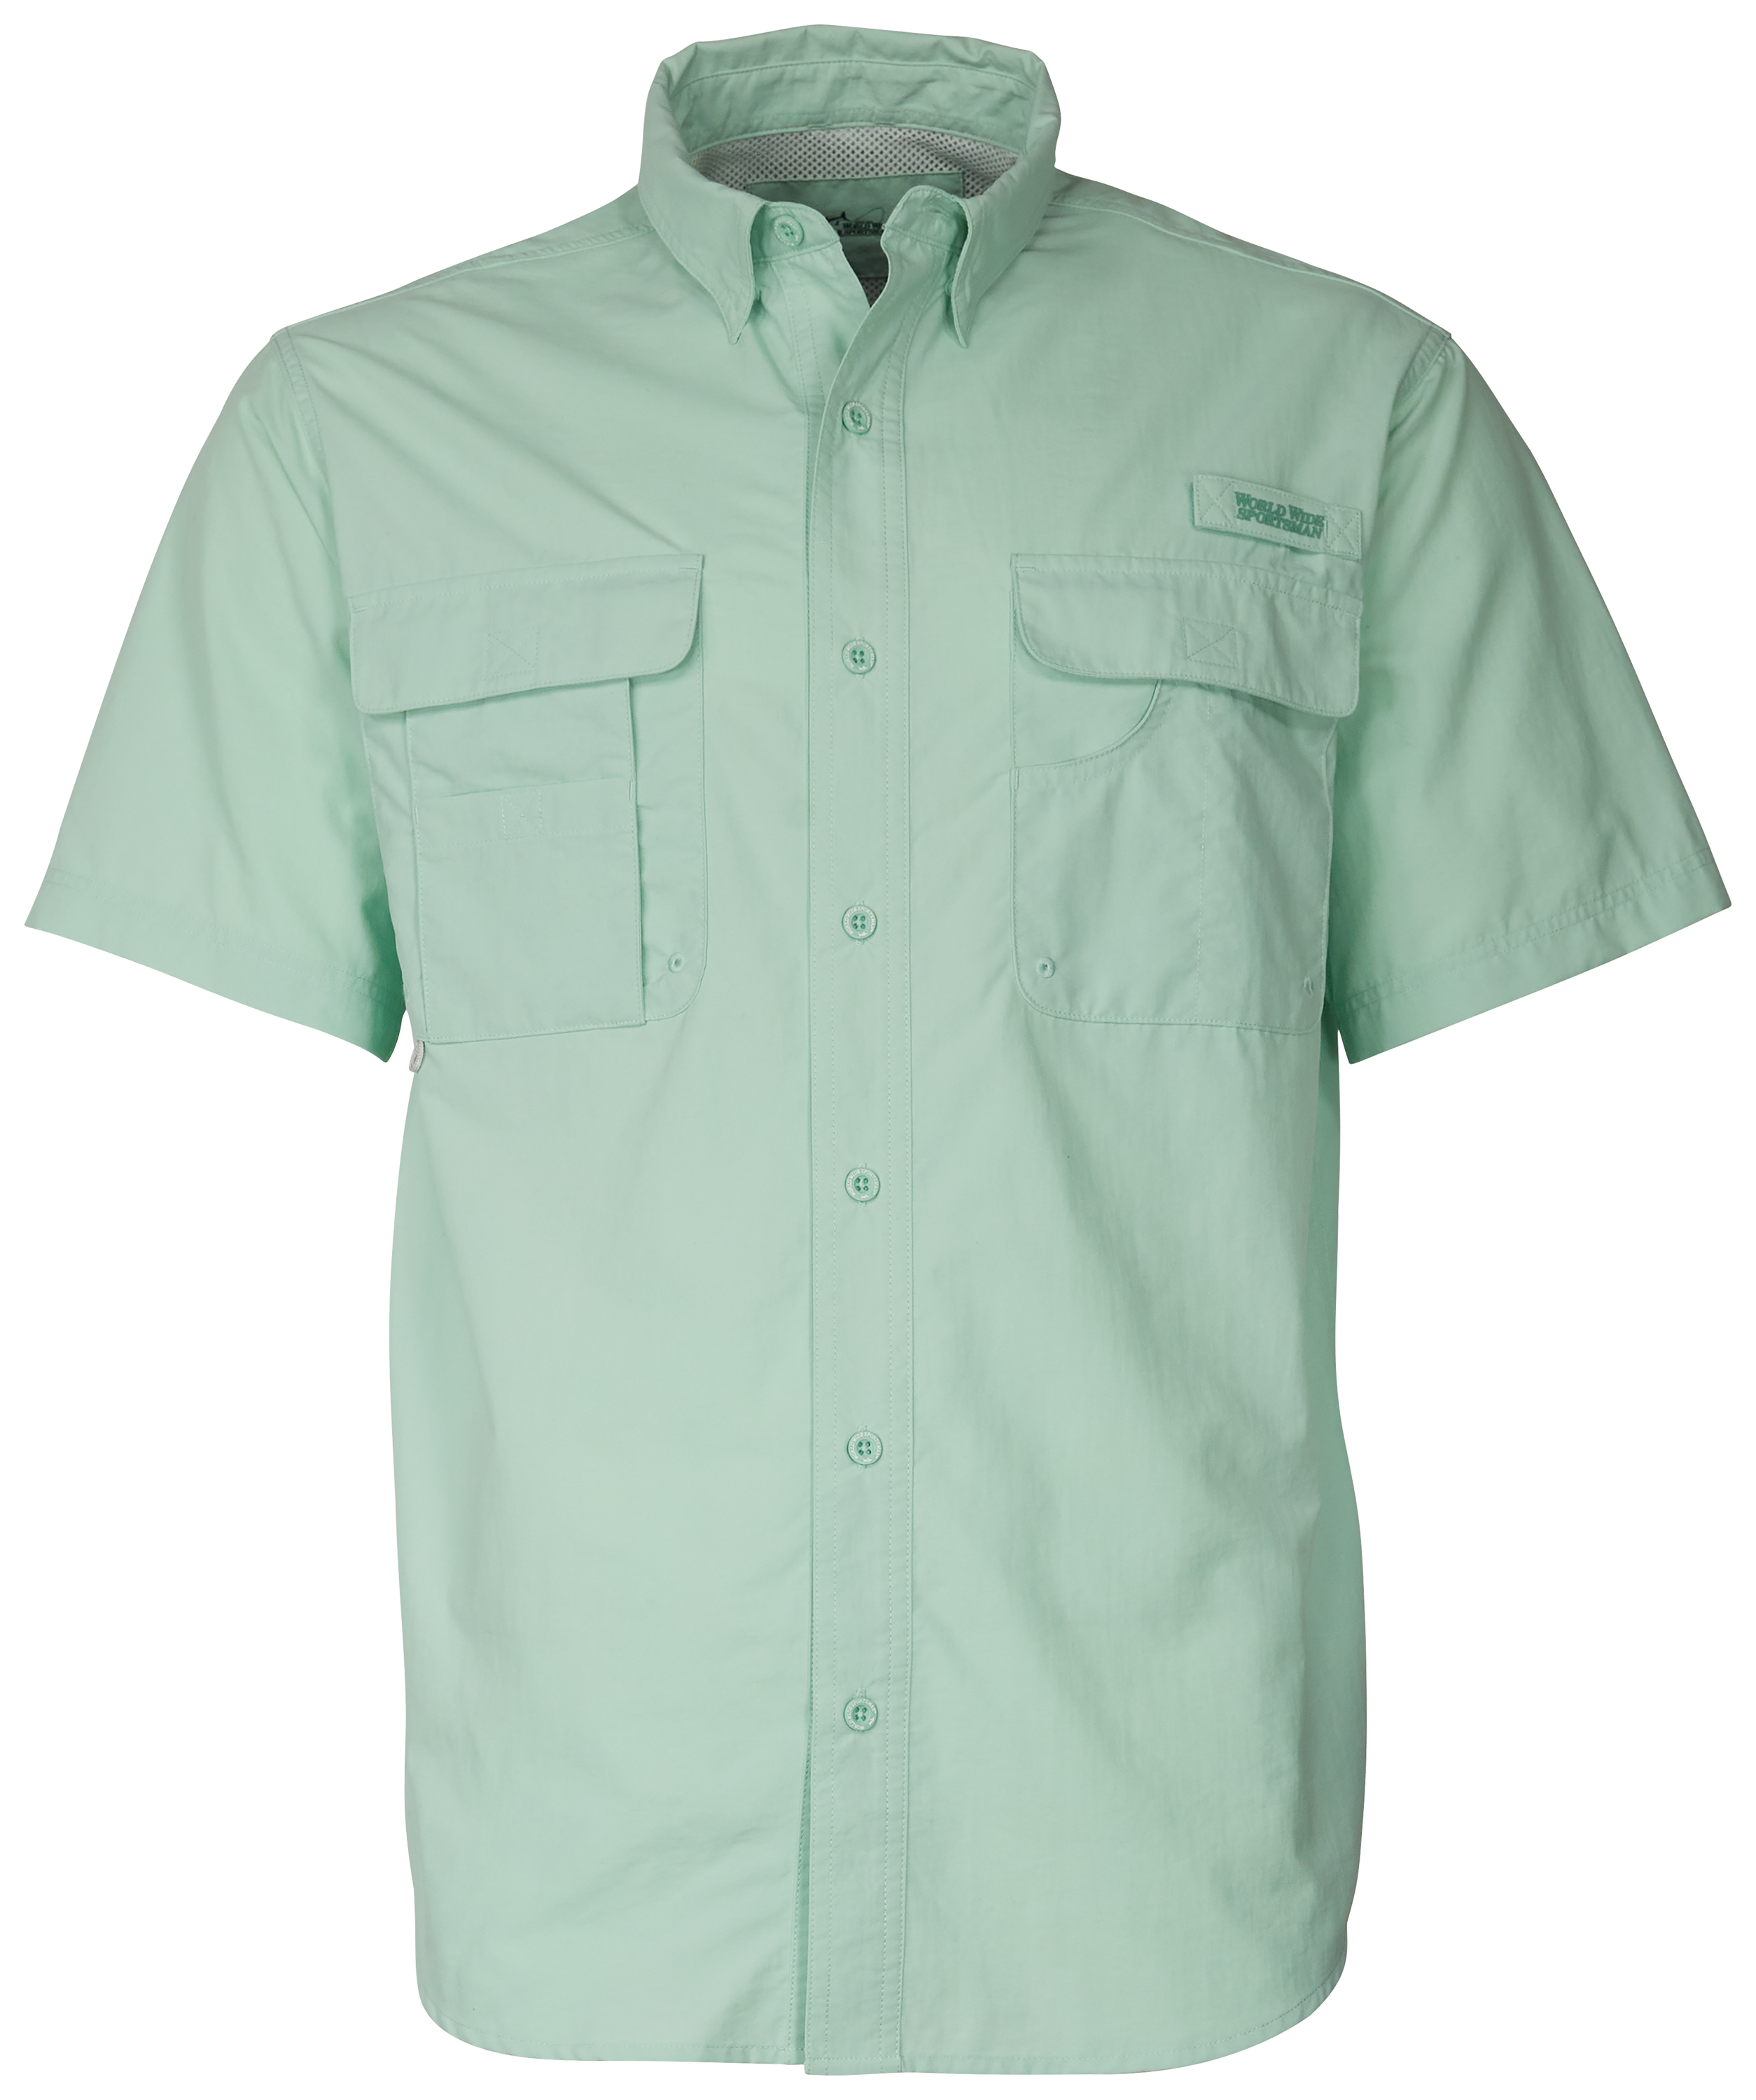 World Wide Sportsman Recycled-Nylon Angler 2.0 Short-Sleeve Button-Down Shirt for Men - Lichen - XL